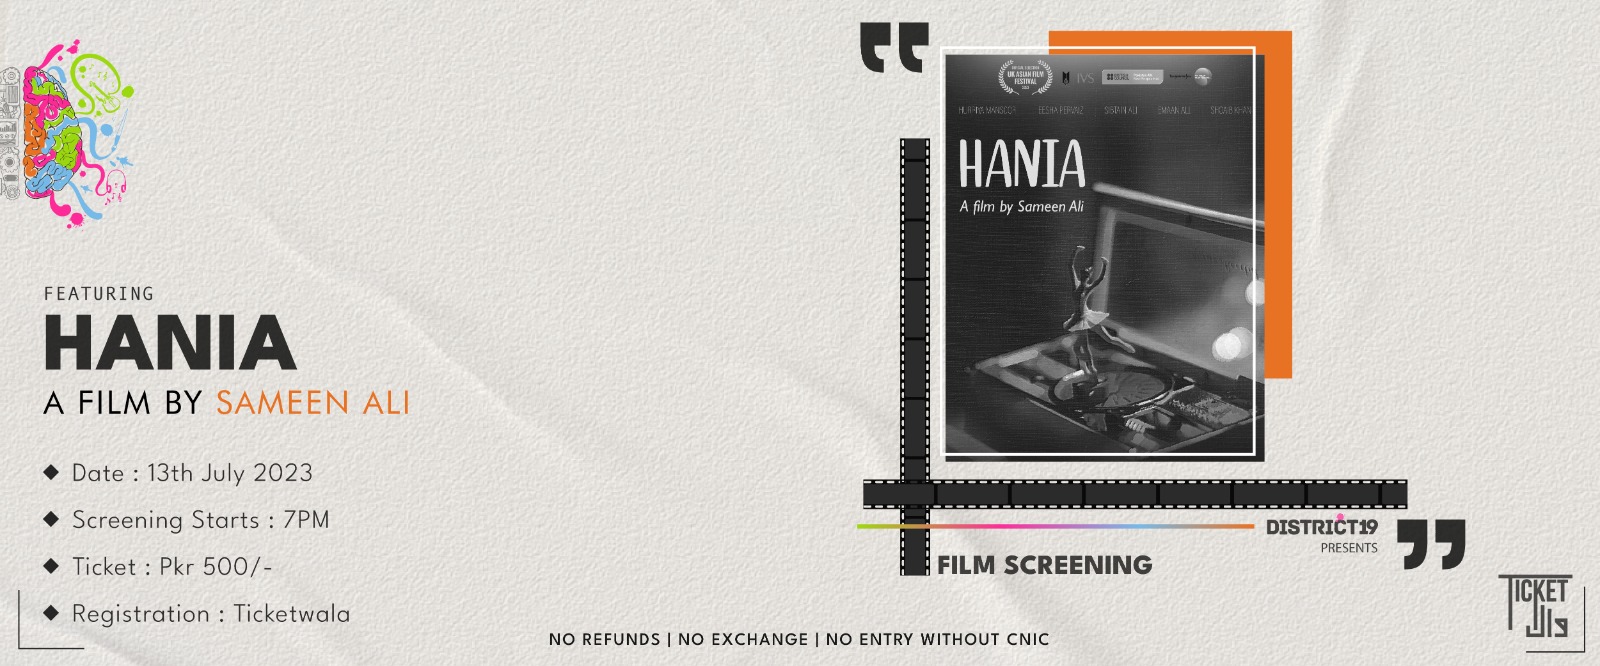 Hania - Film Screening